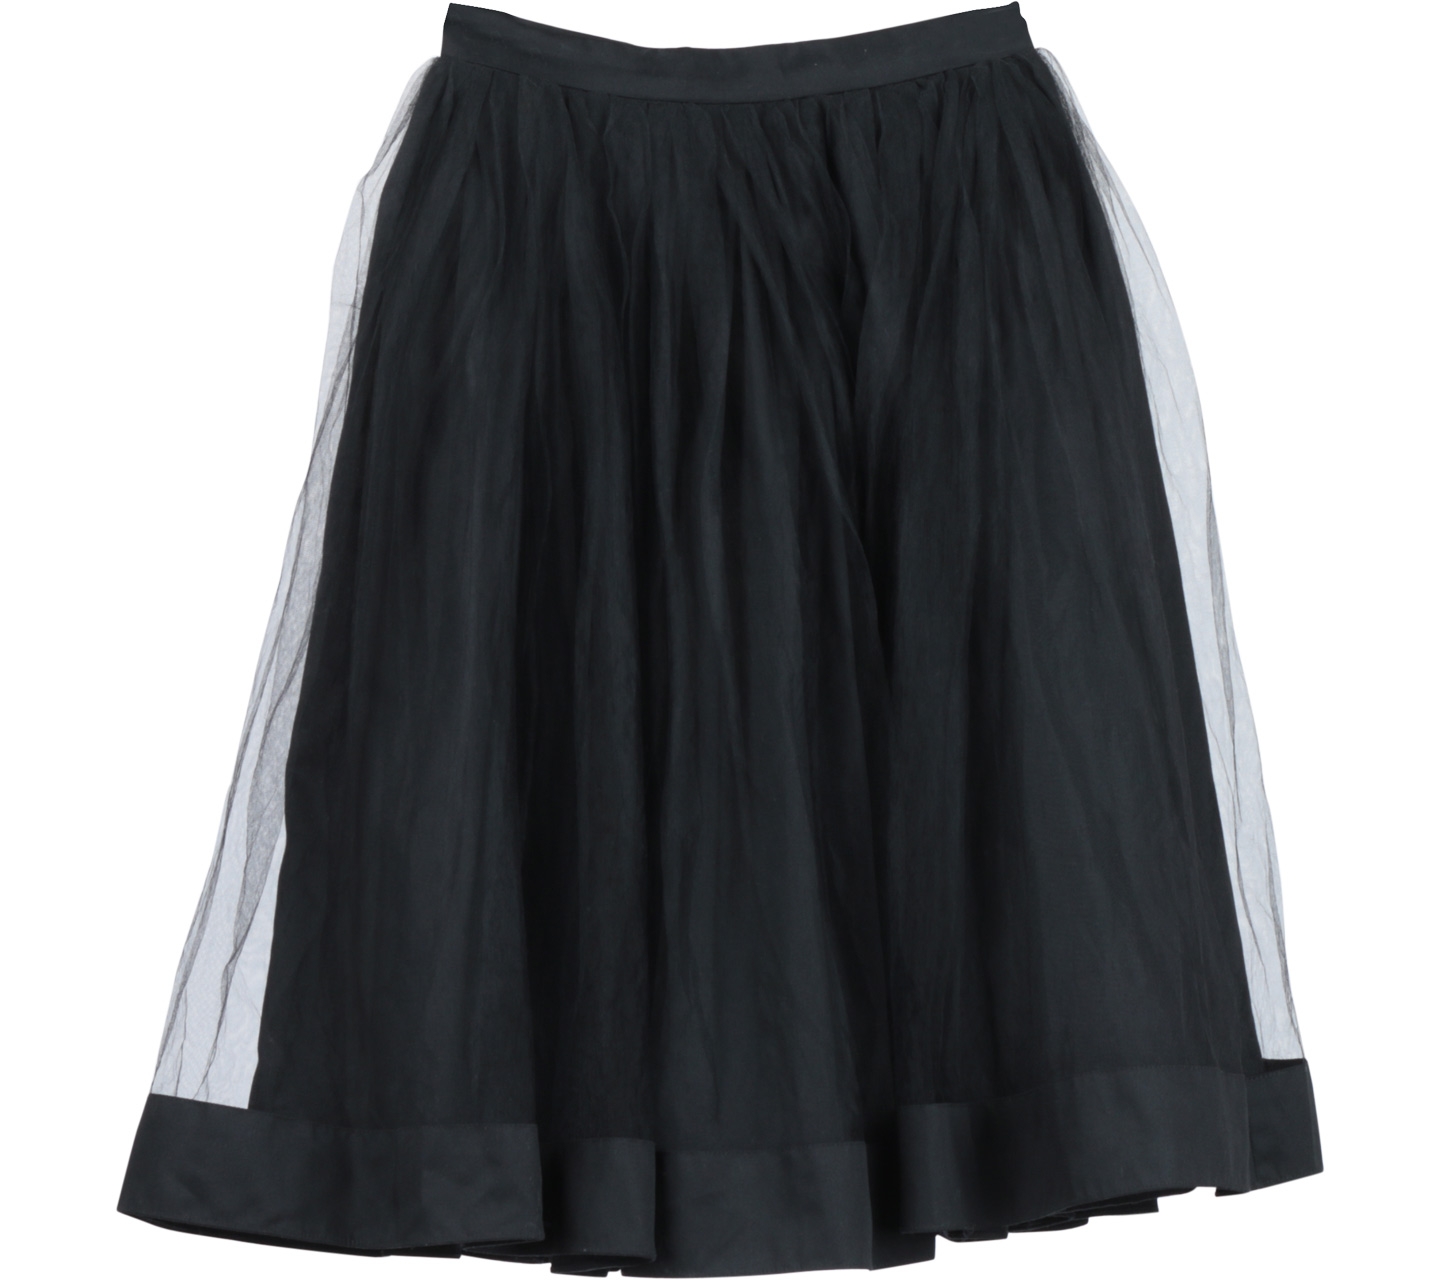 Hello Pupu Black Tulle Skirt